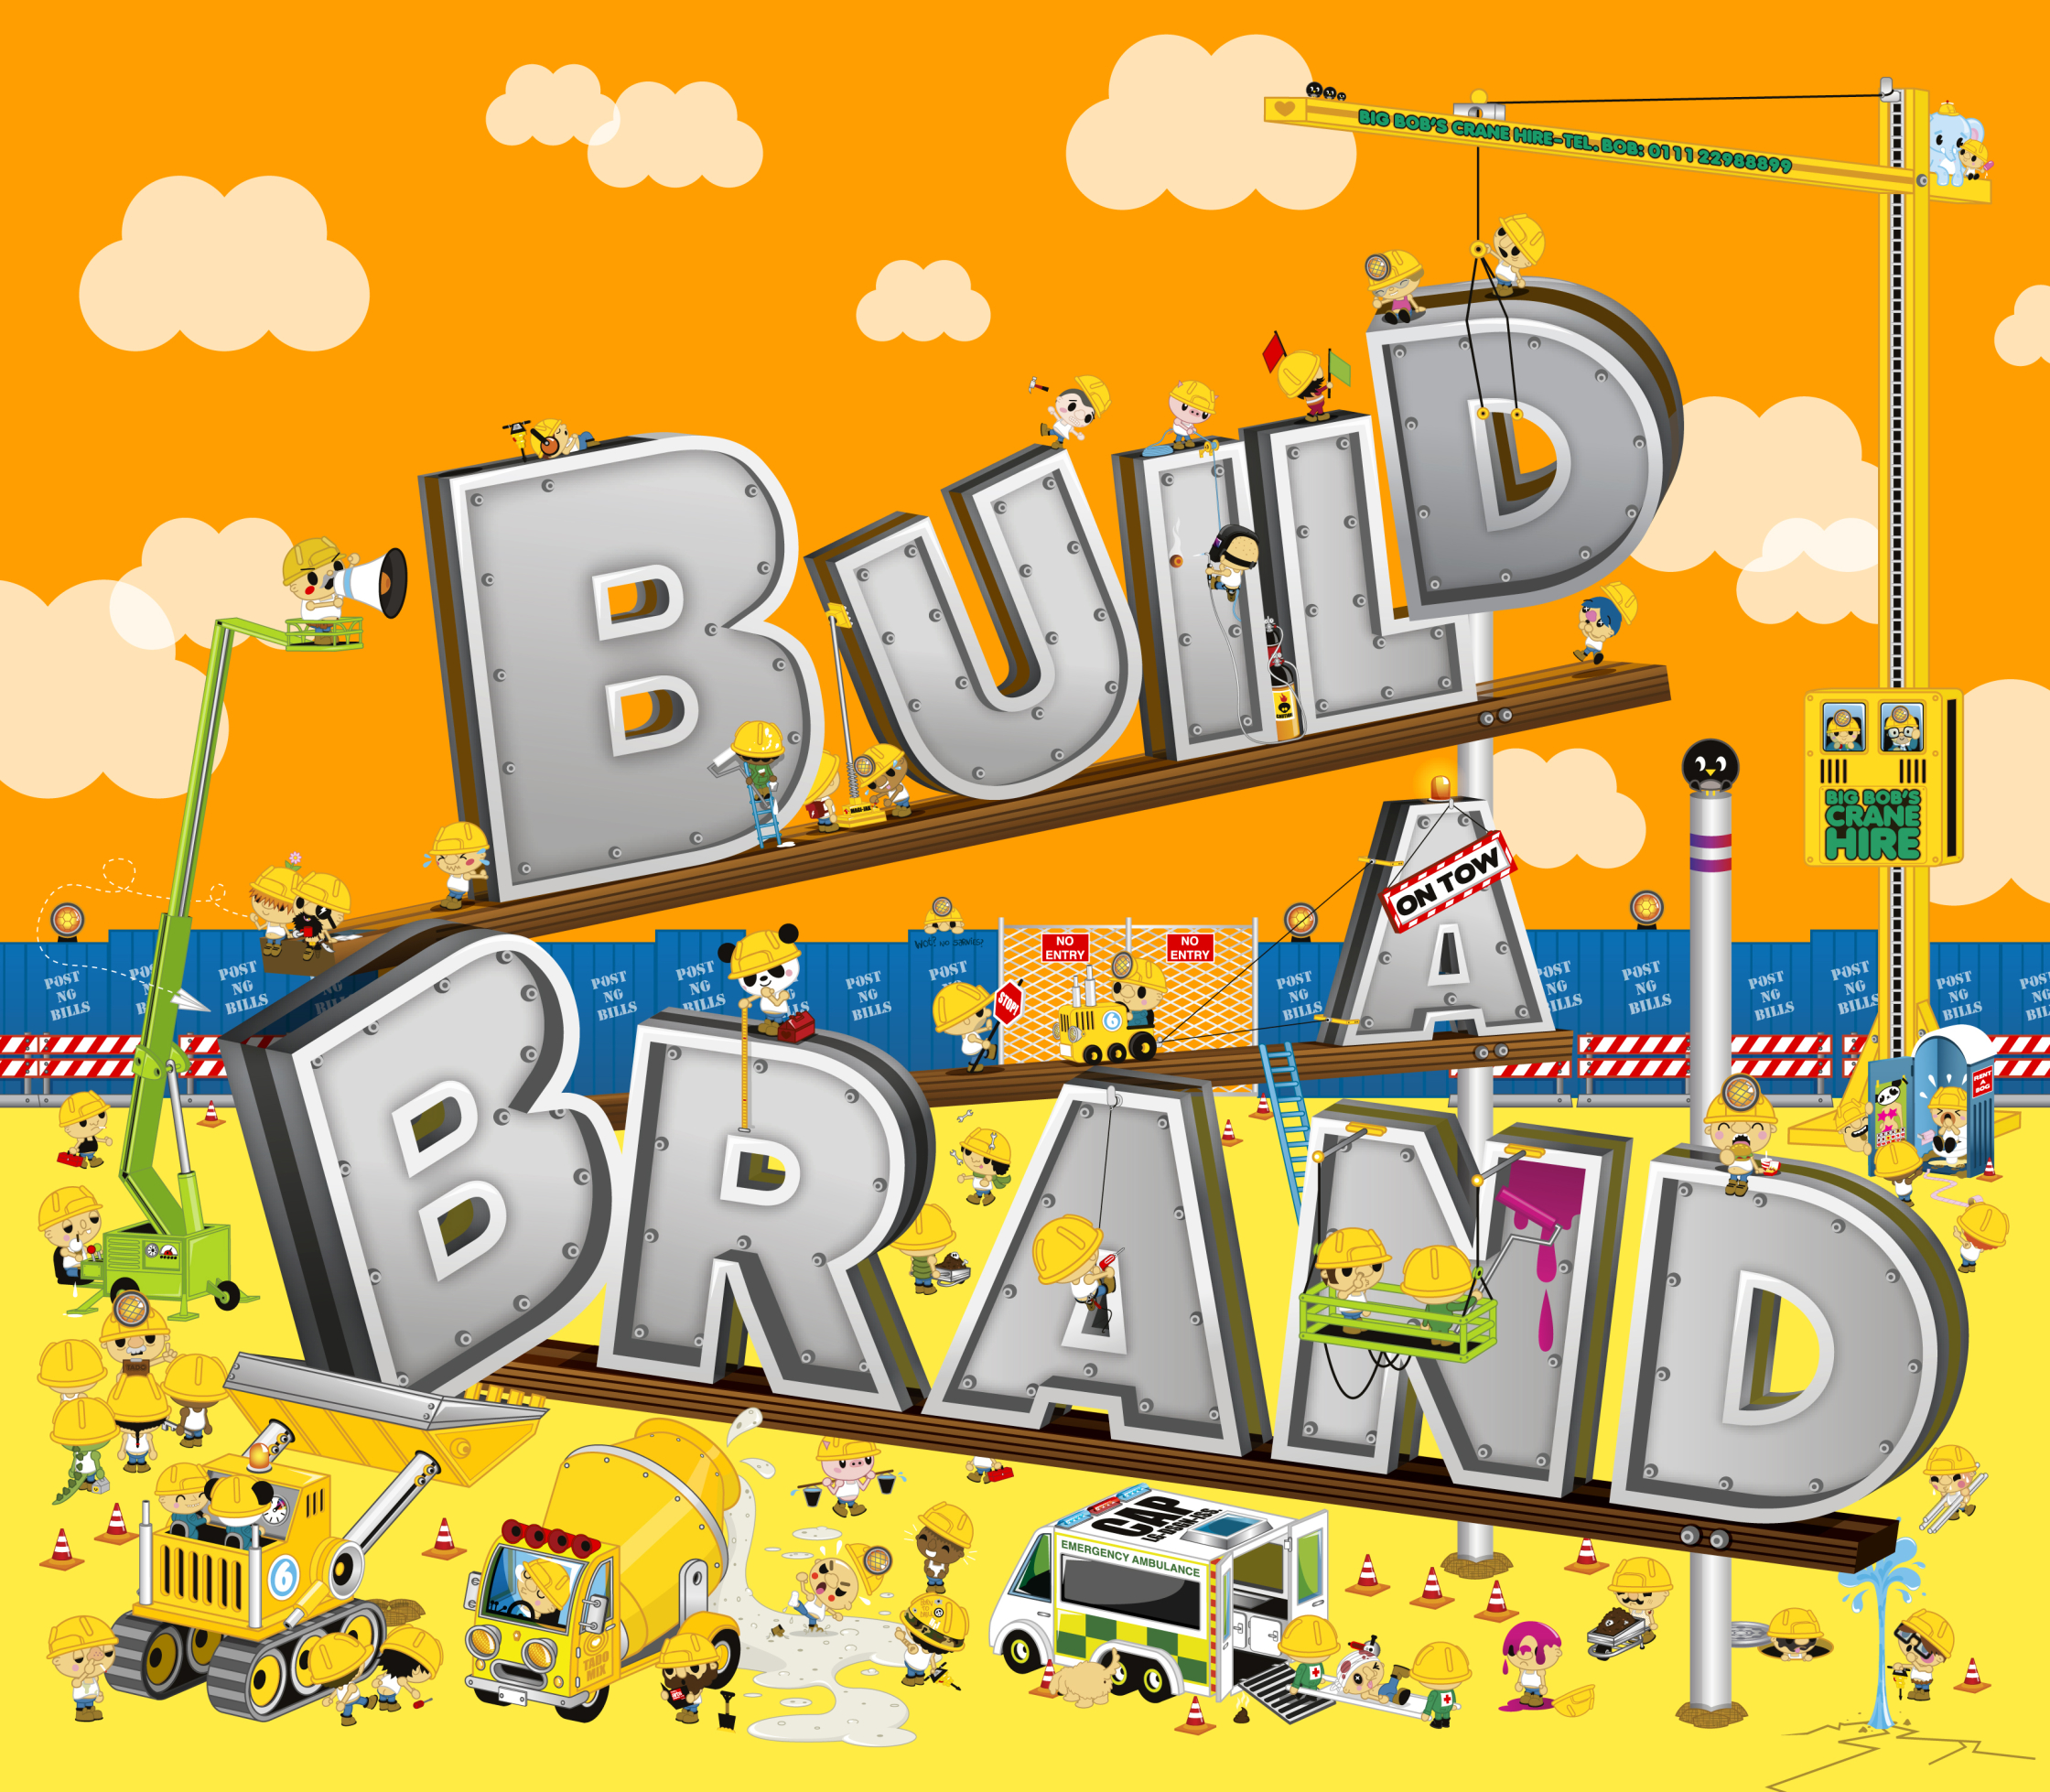 Brand Builders / Computer Arts Magazine